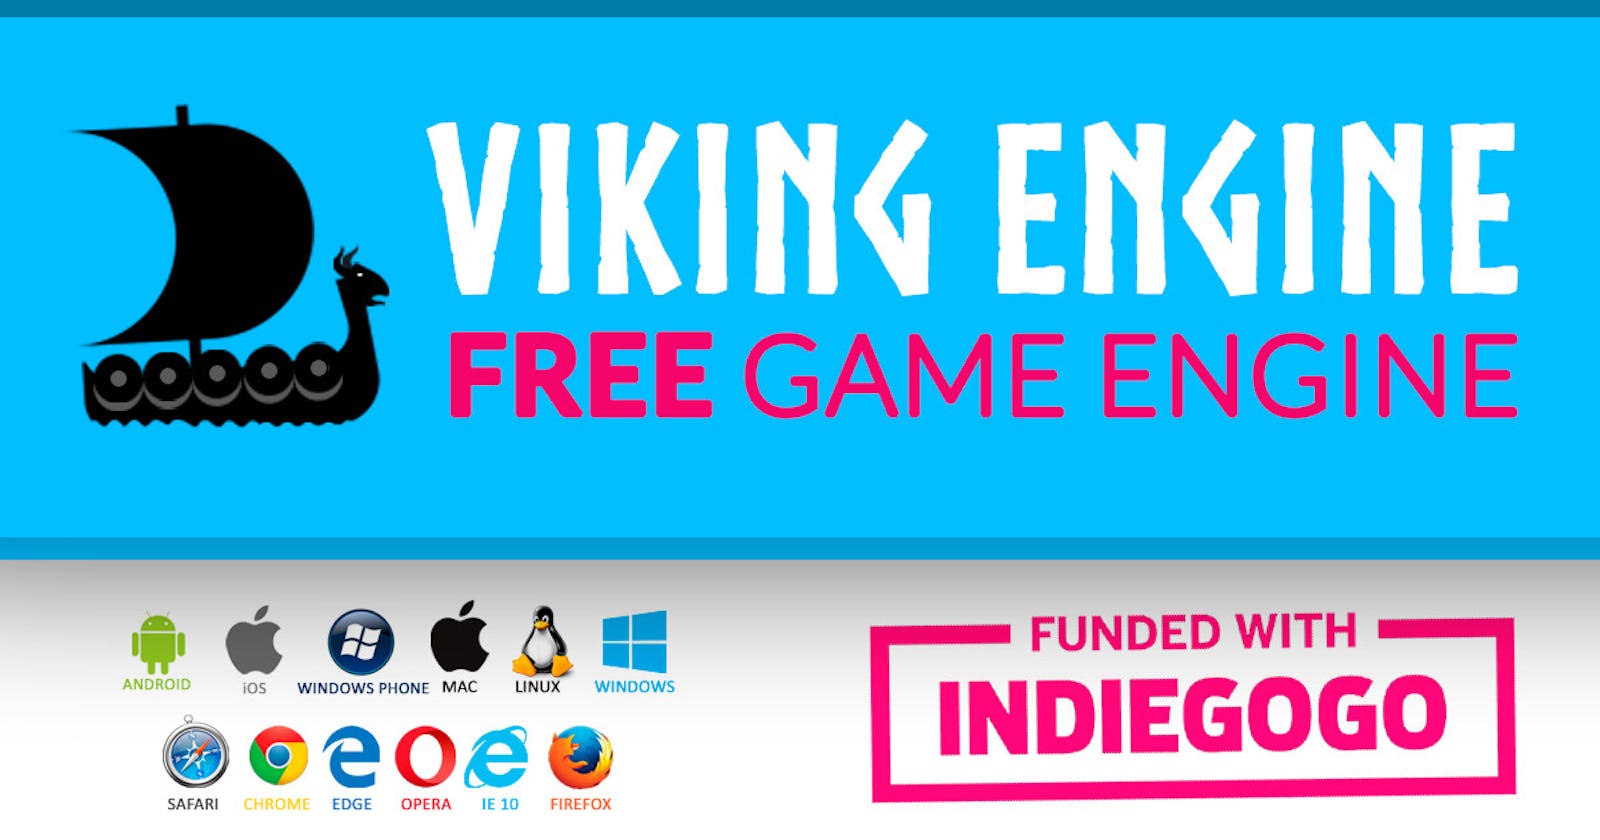 Viking Engine: Free game engine